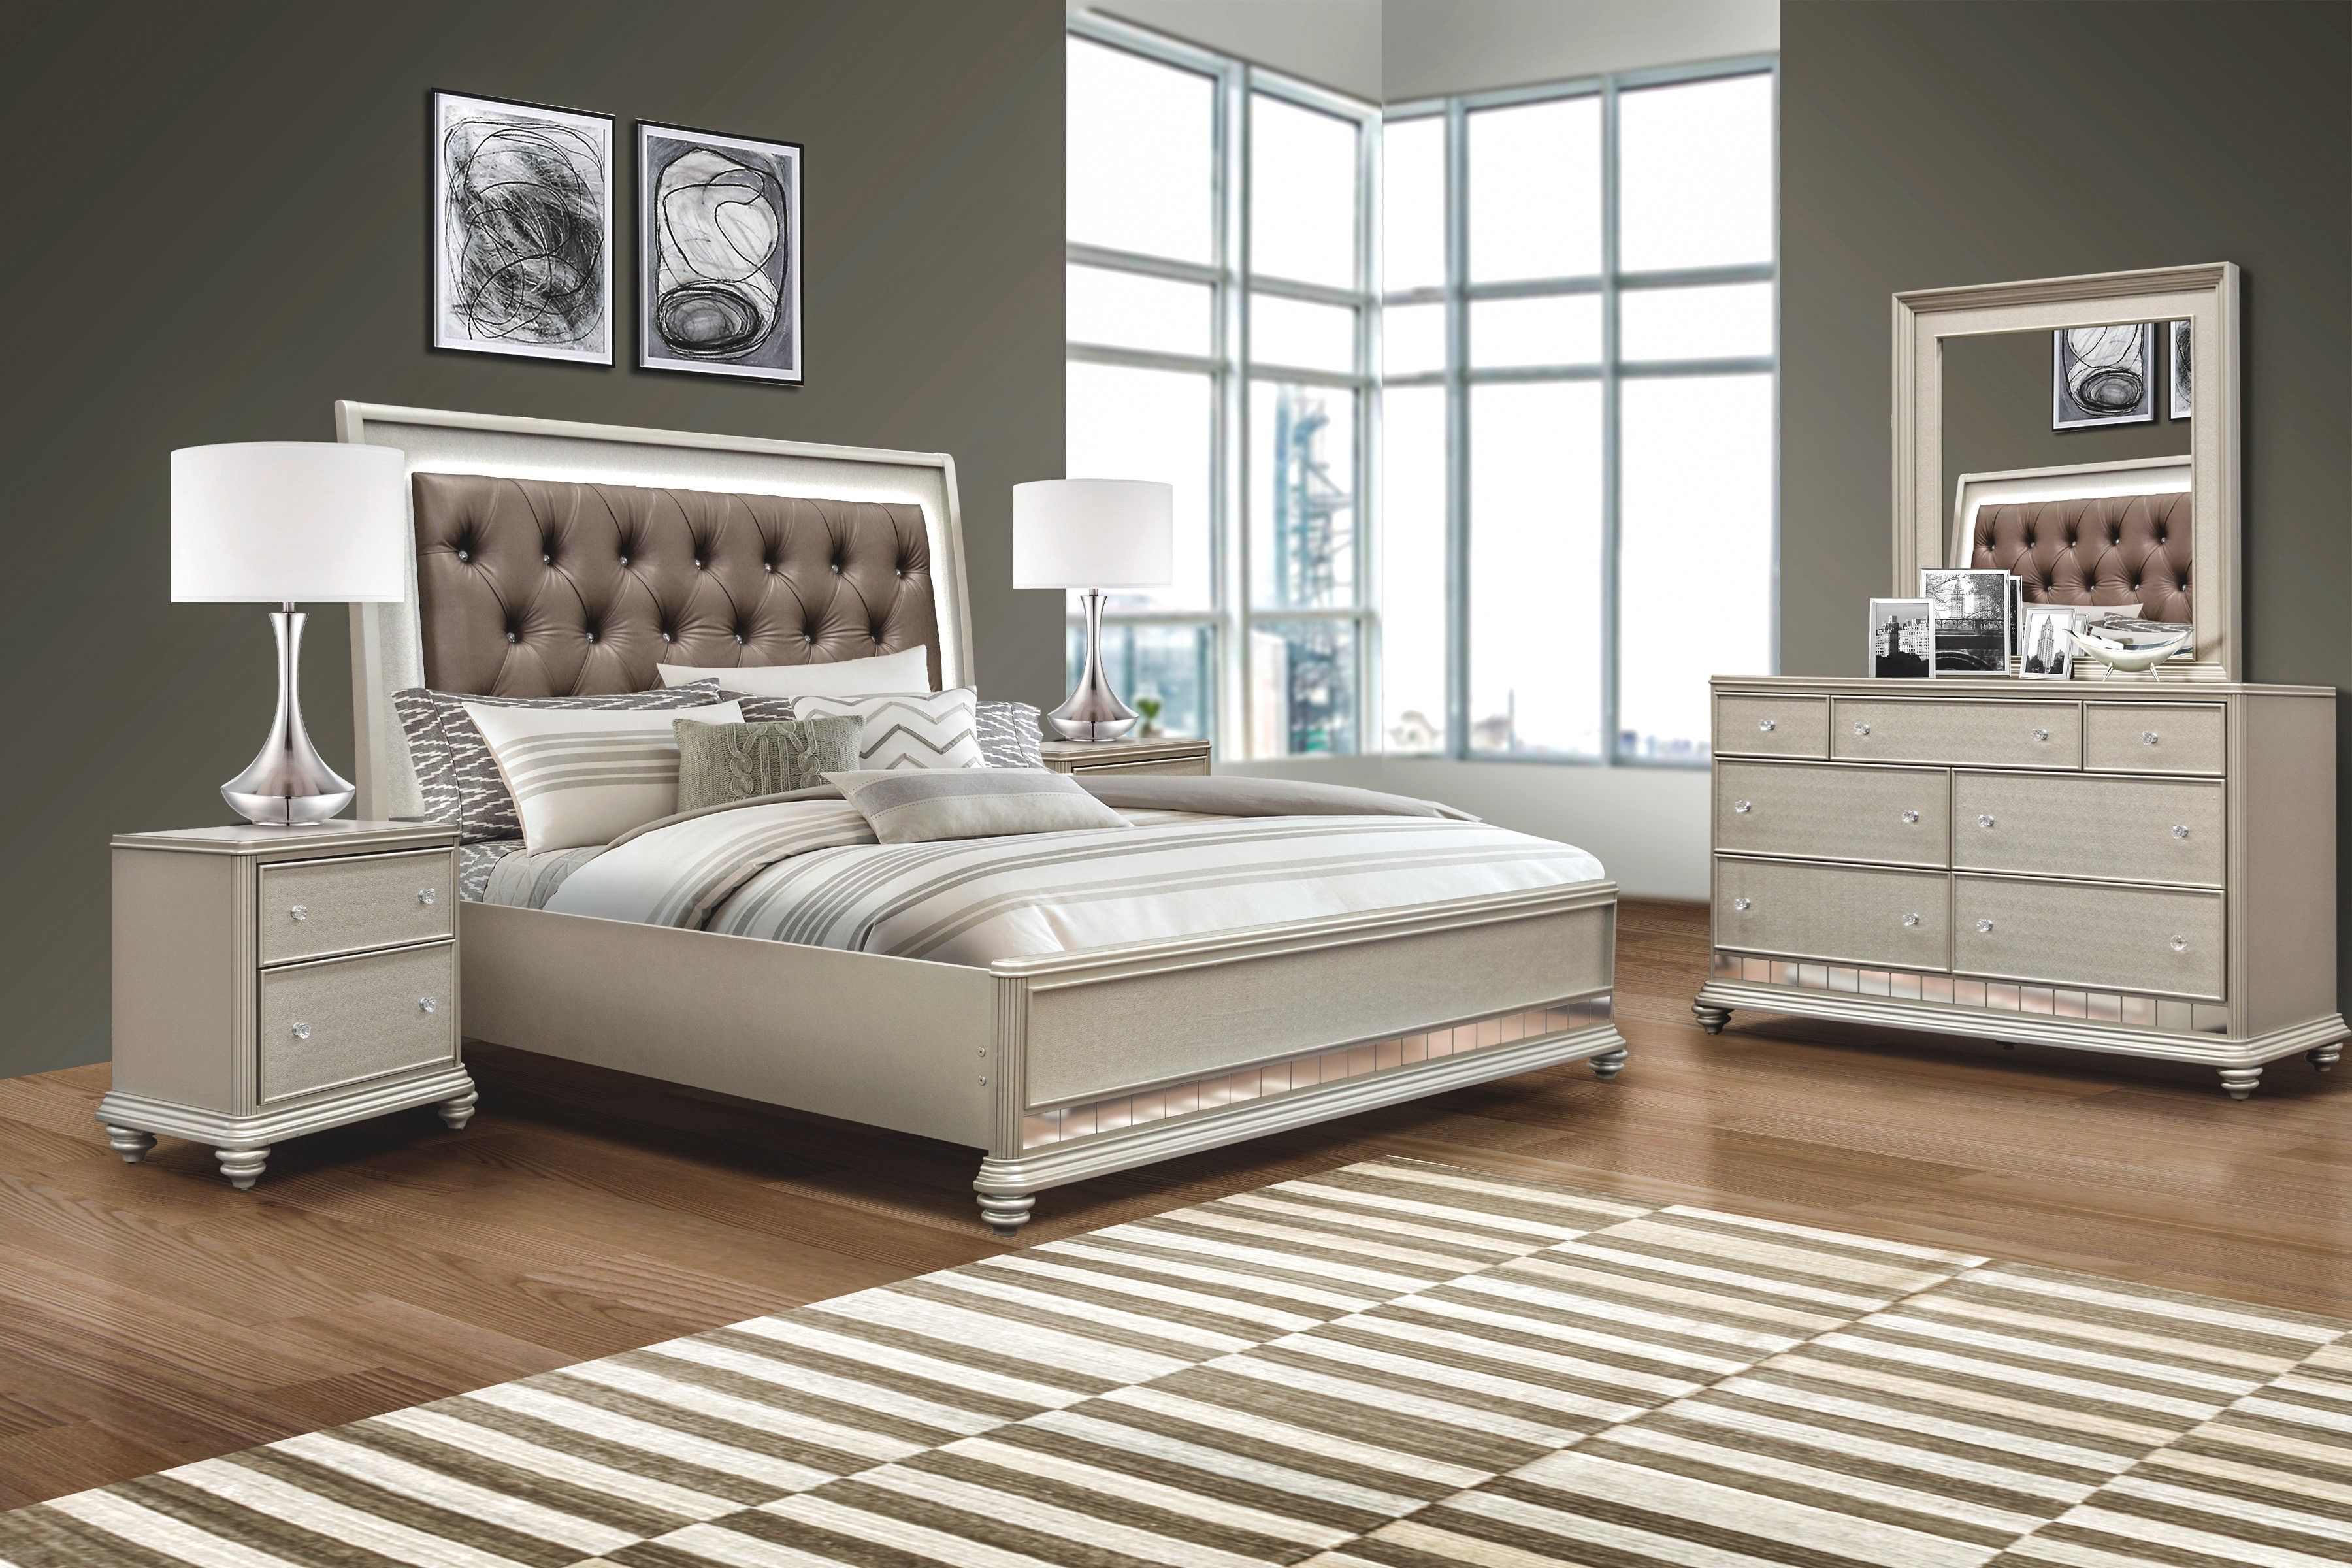 famsa bedroom furniture set